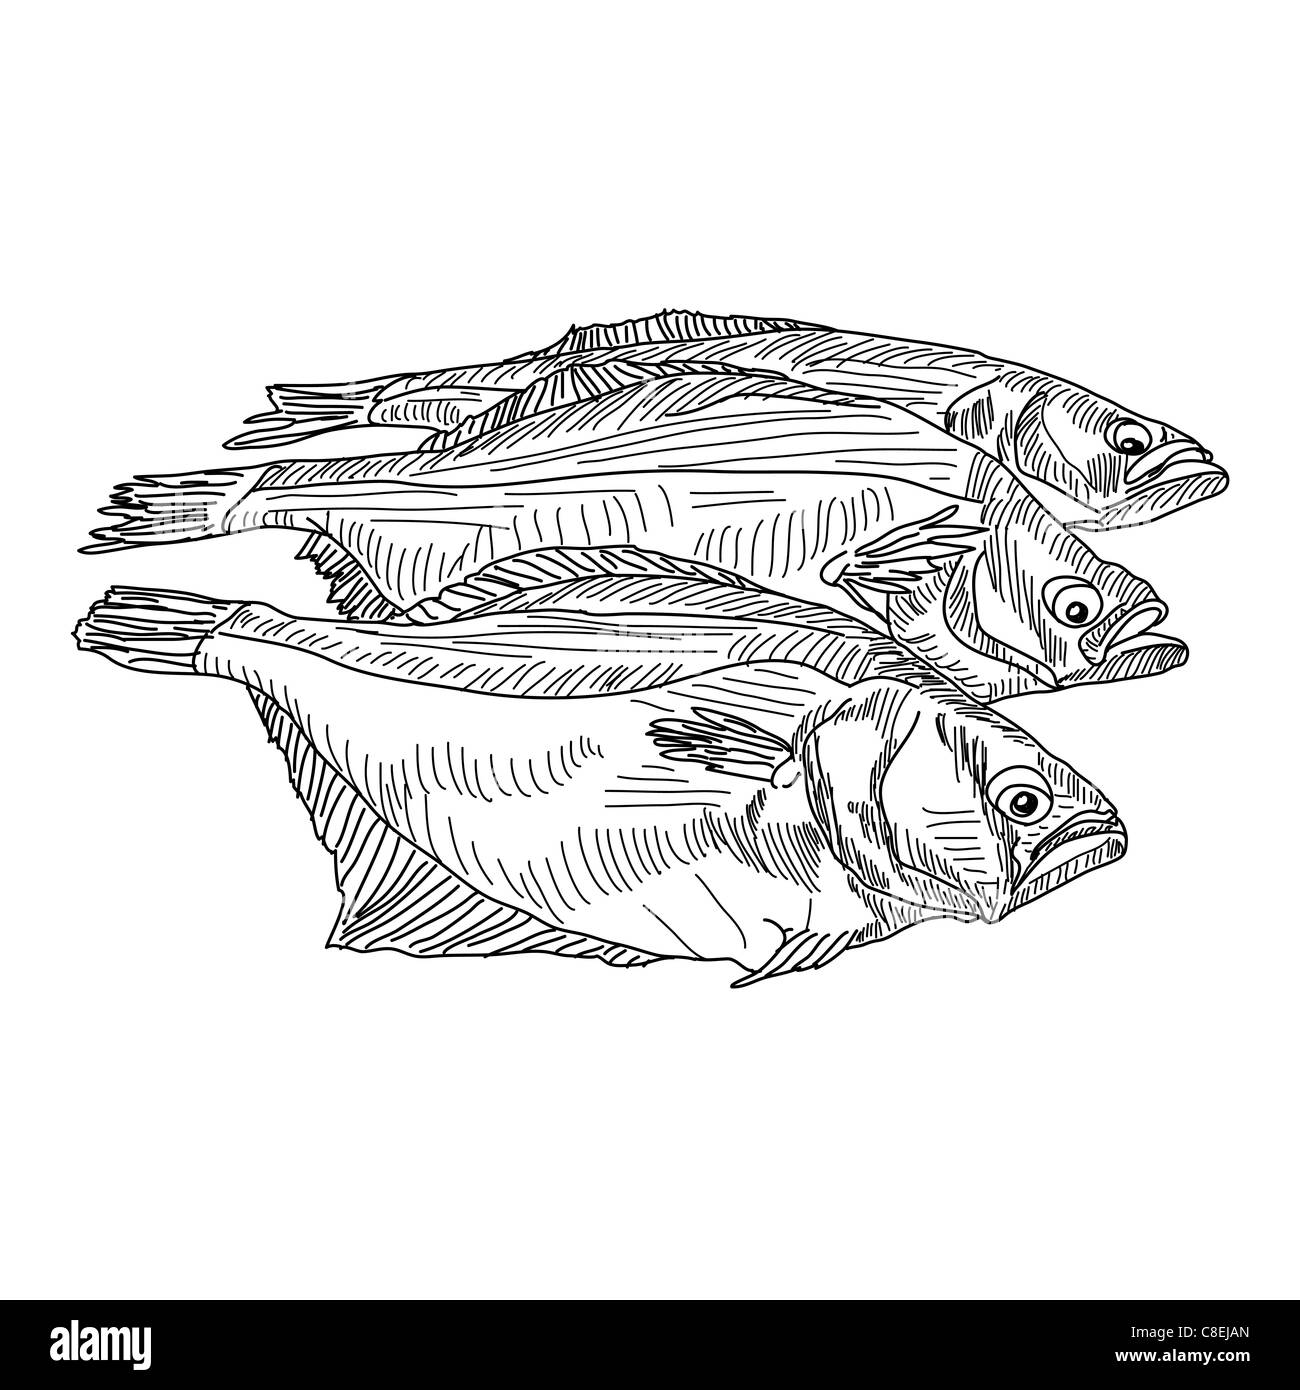 vector drawing hand fish Stock Photo